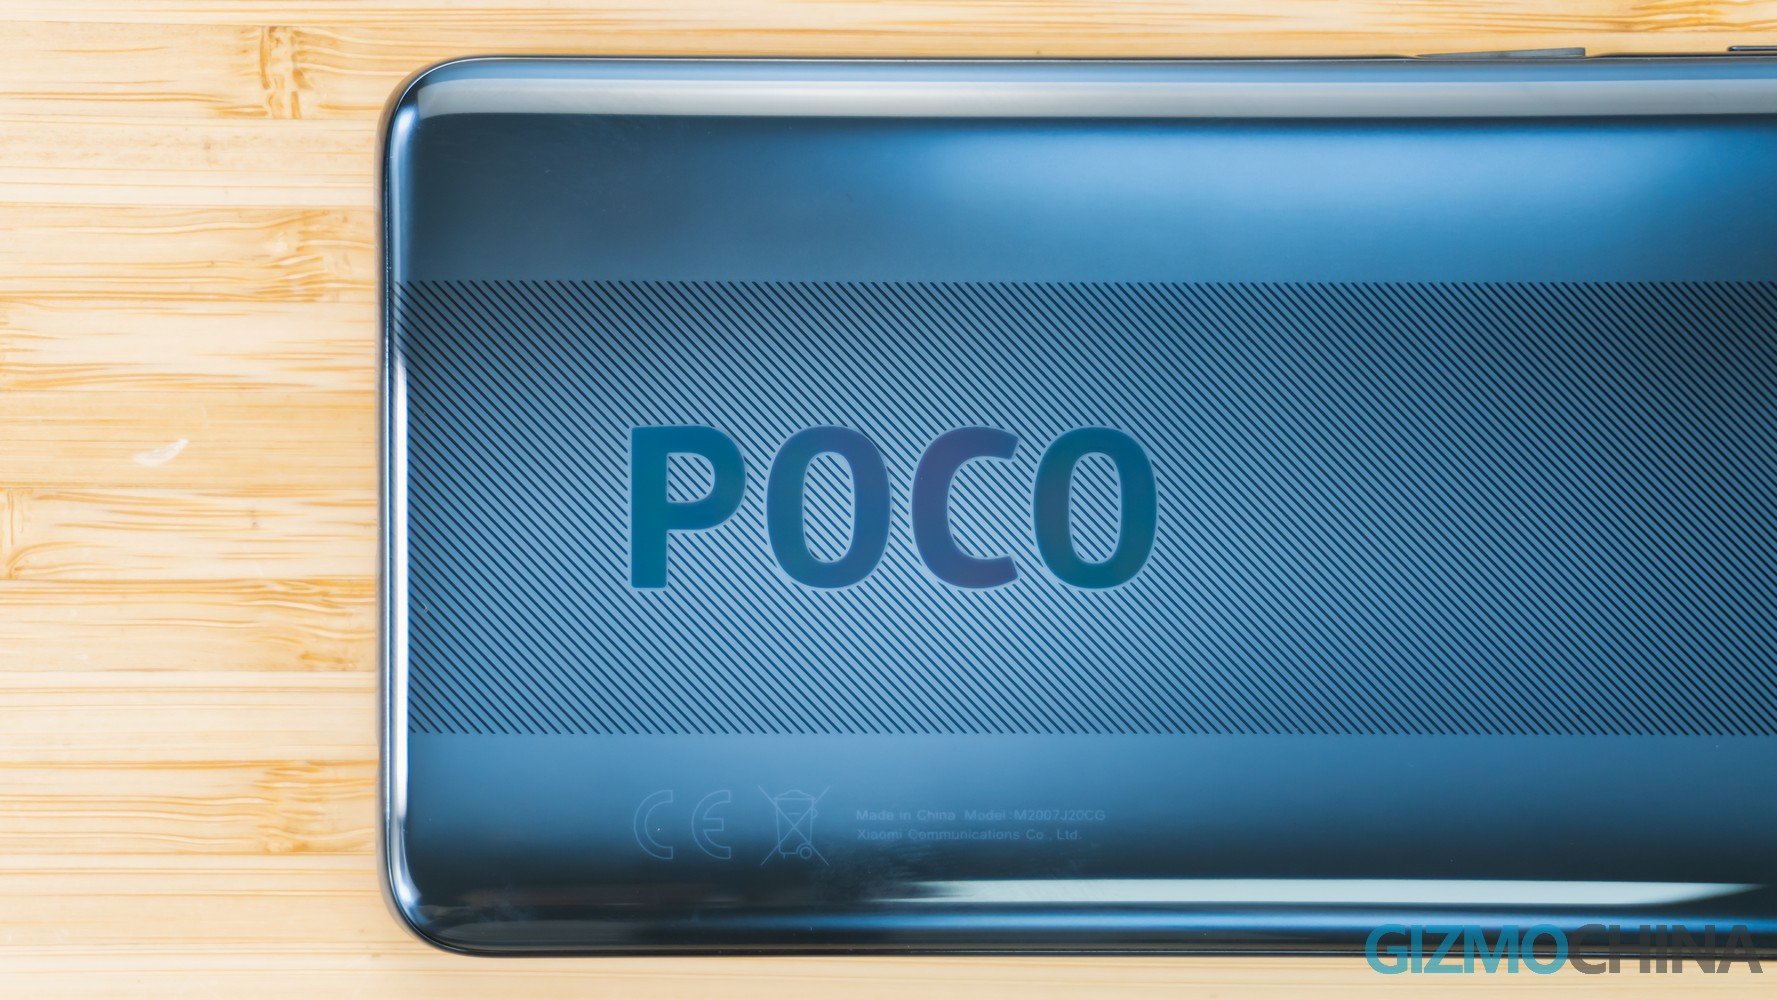 POCO X3 NFC logo featured